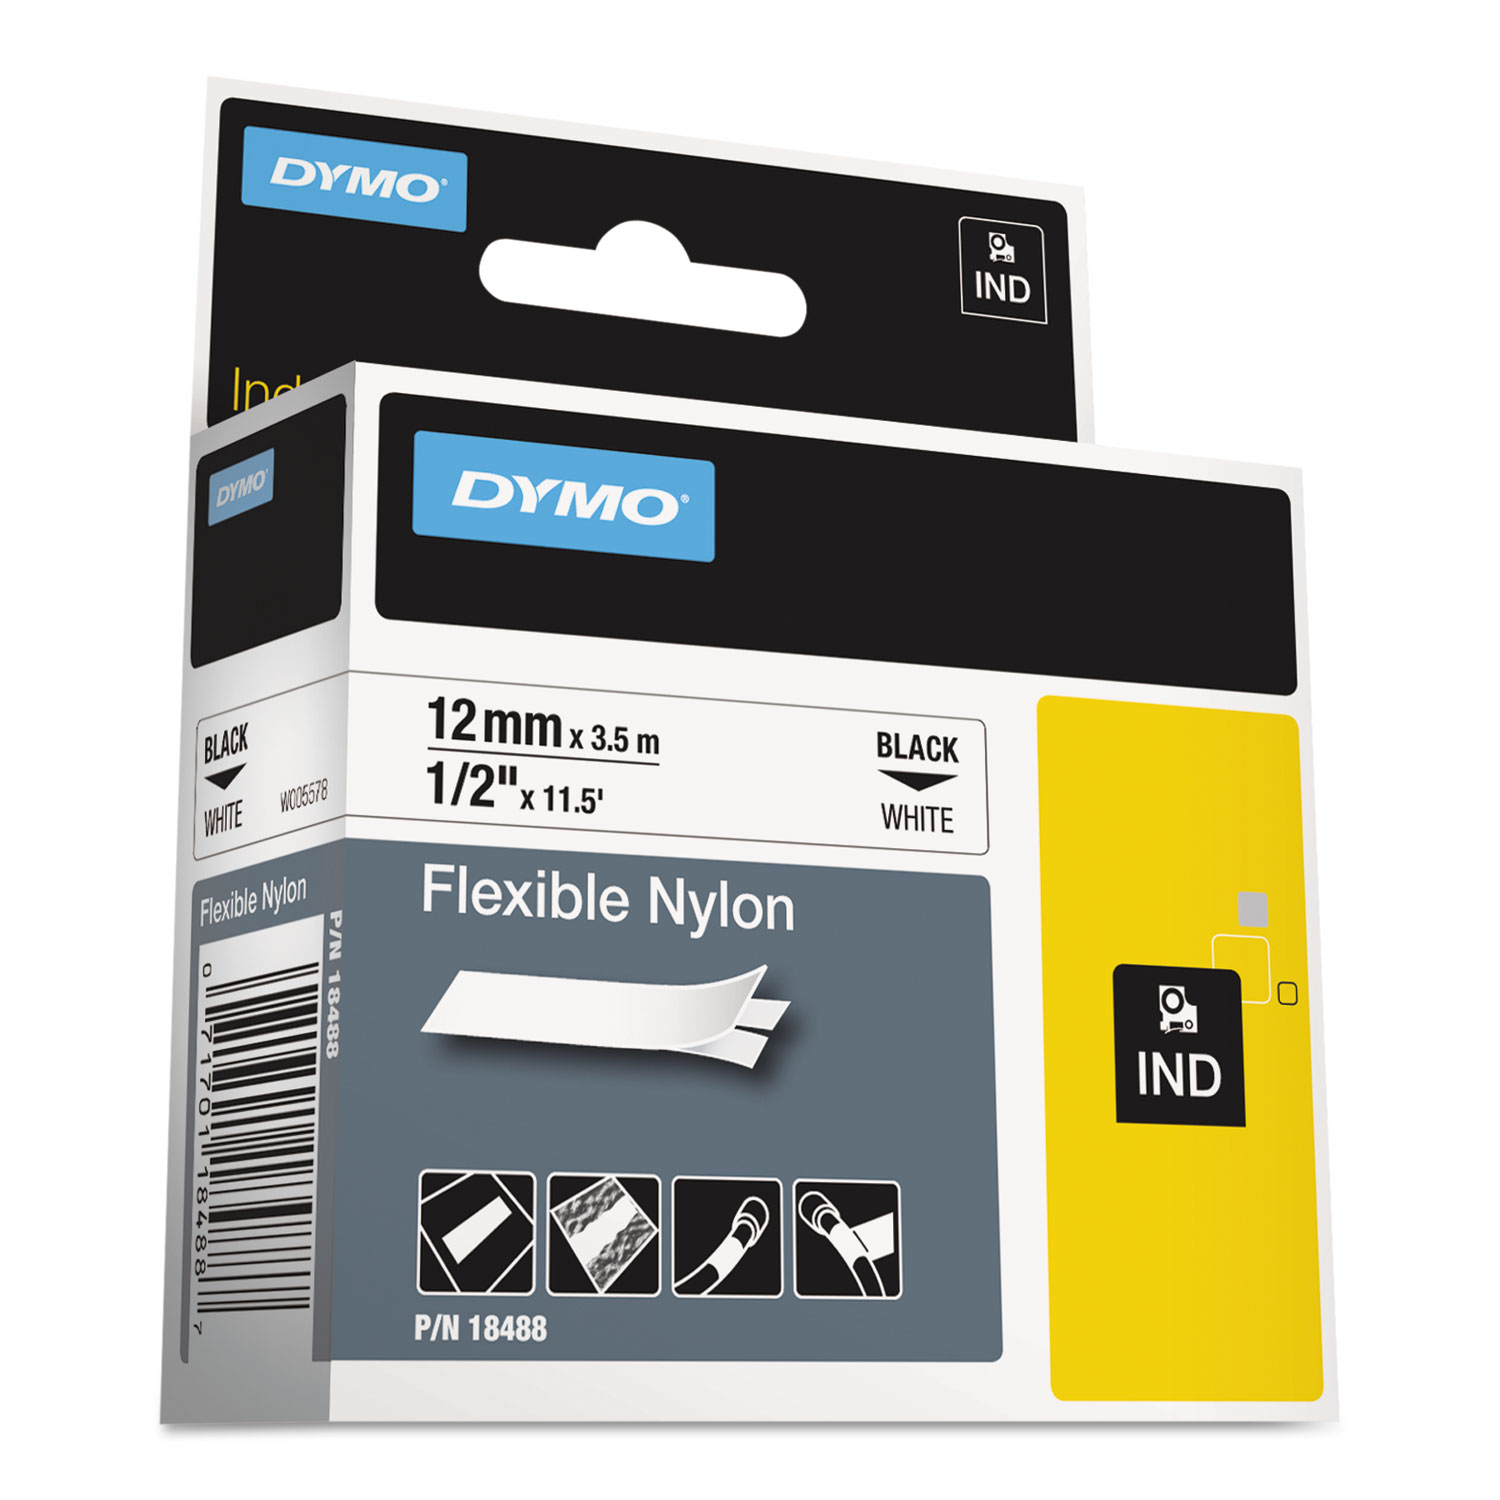  DYMO 18488 Rhino Flexible Nylon Industrial Label Tape, 0.5 x 11.5 ft, White/Black Print (DYM18488) 